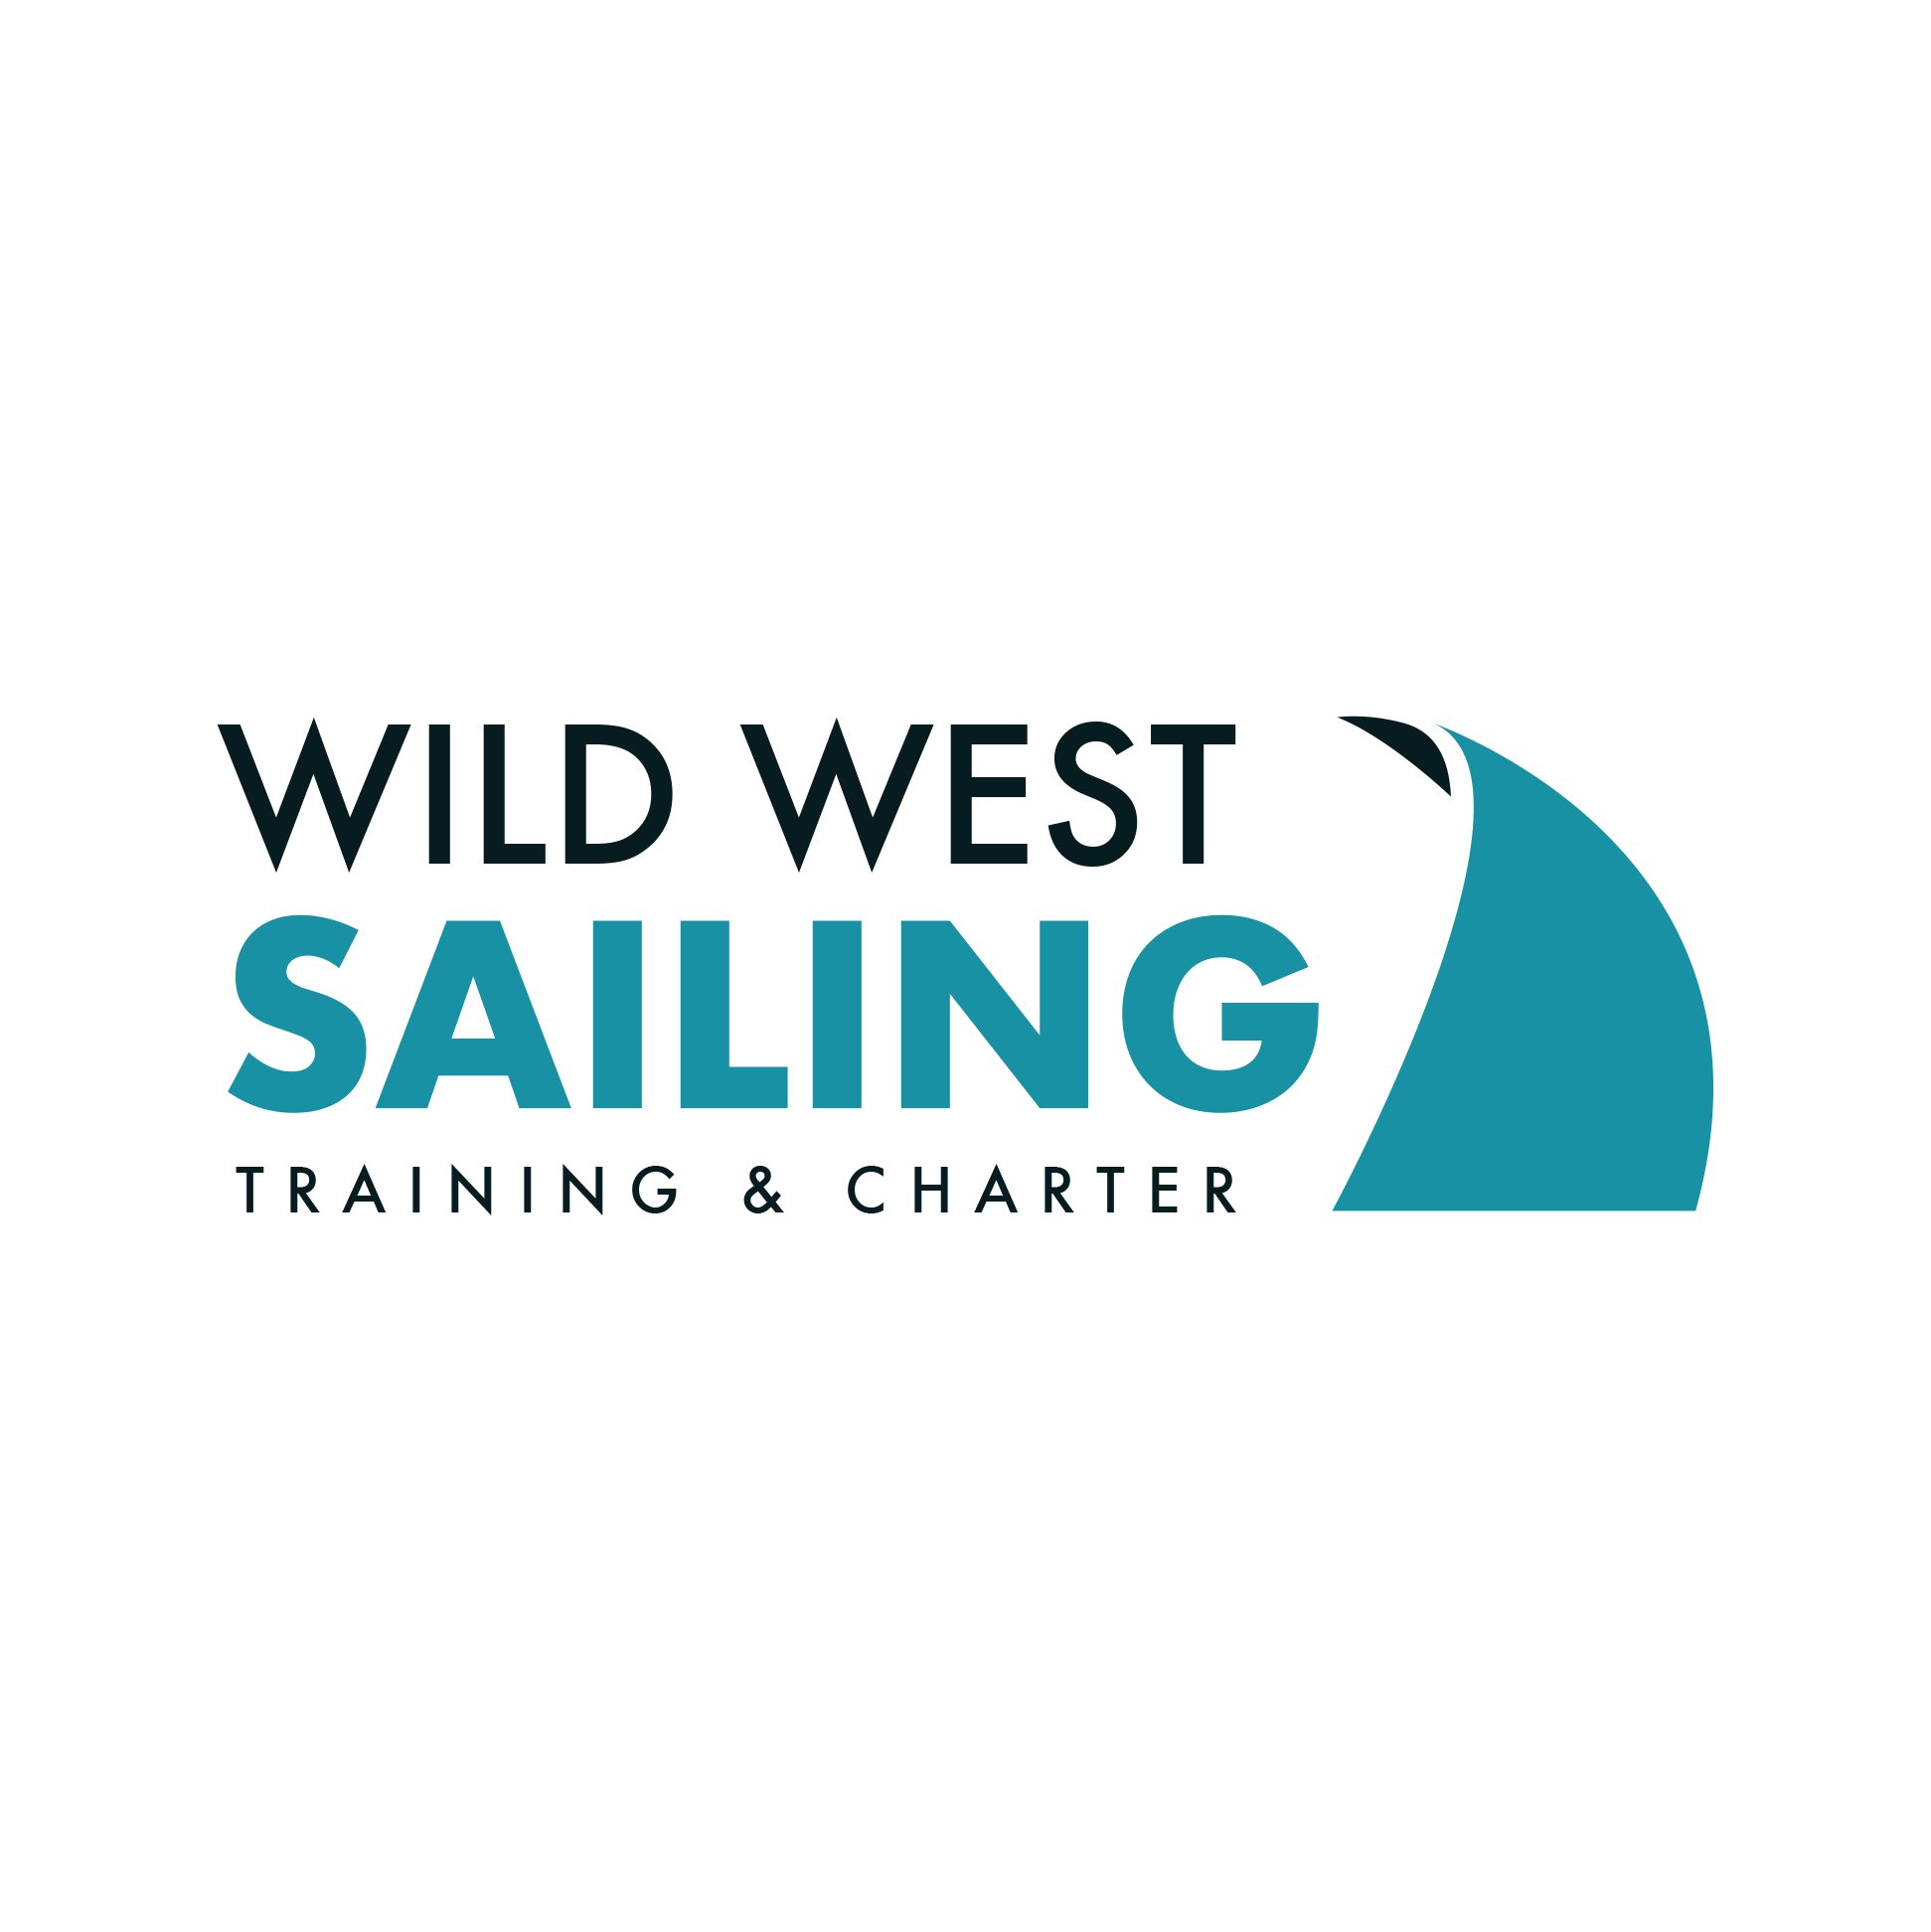 Sailing Adventures & Training on the Wild Atlantic Way
https://t.co/JDUo3bWEgg
https://t.co/sqMLeGeDna